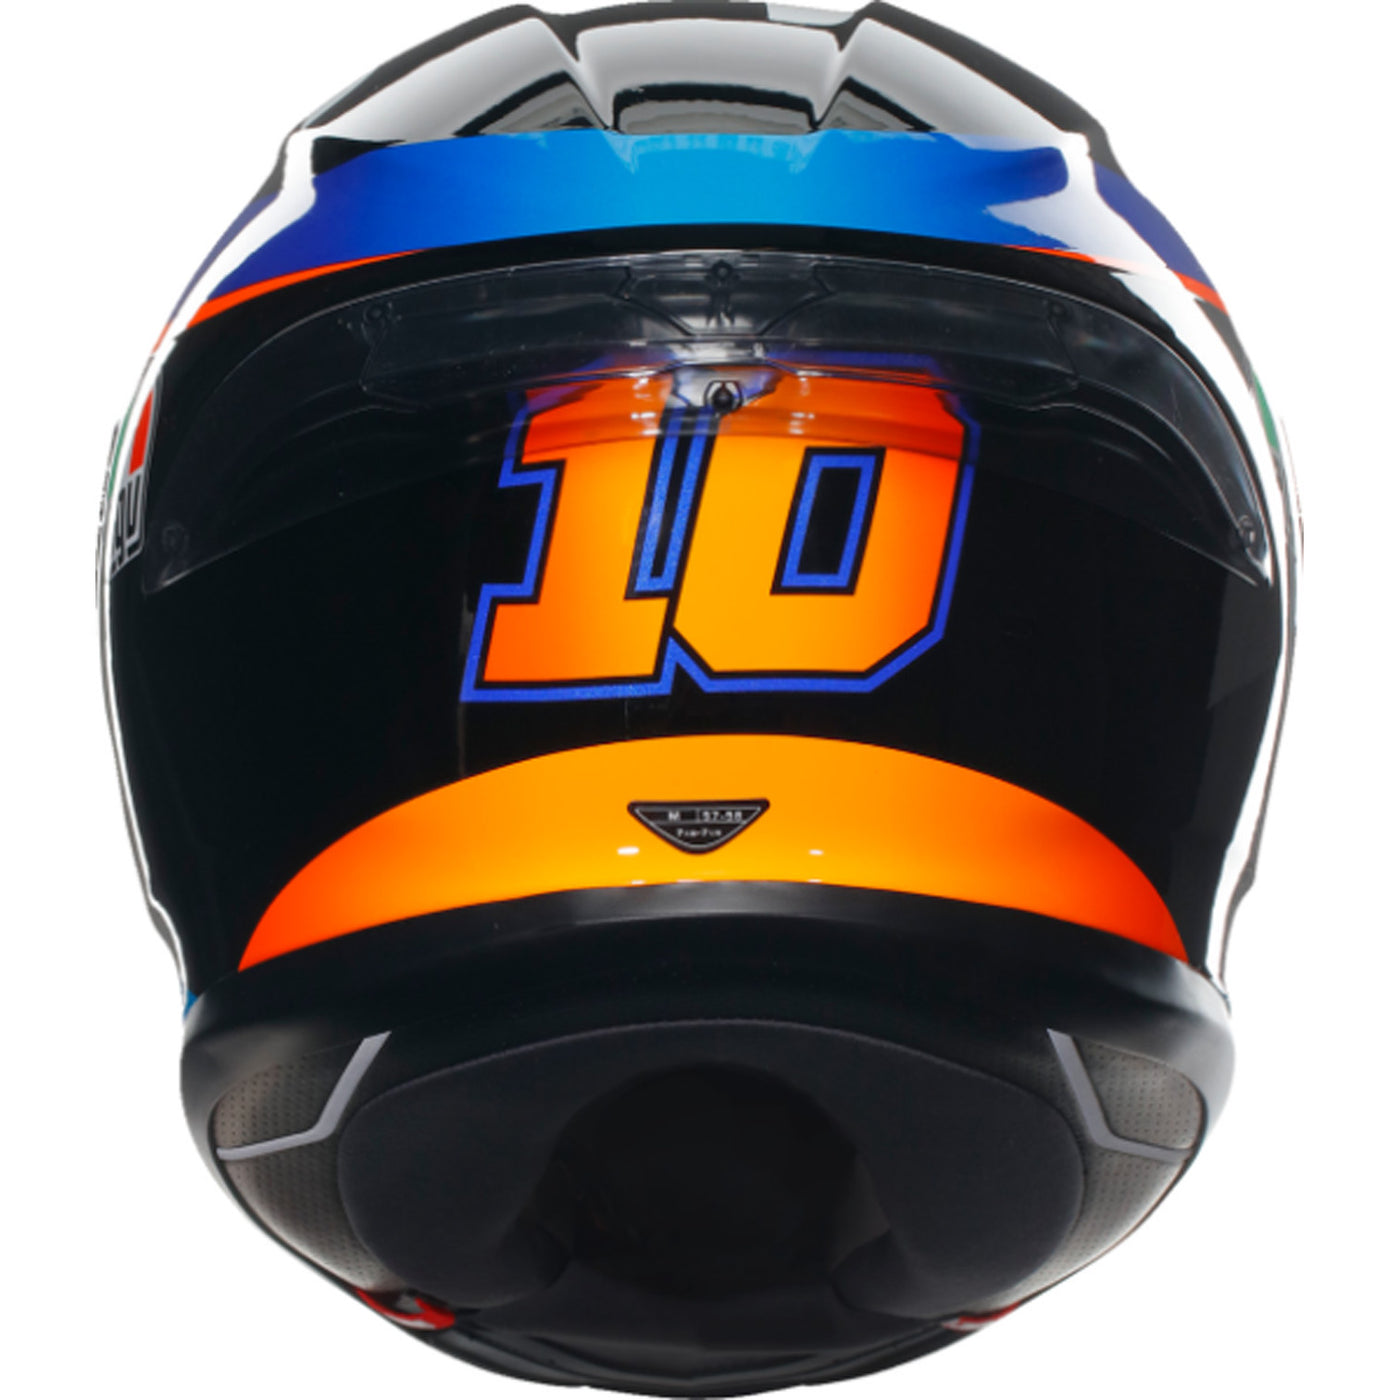 AGV K6 S Marini Sky Racing Team 2021 Helmet